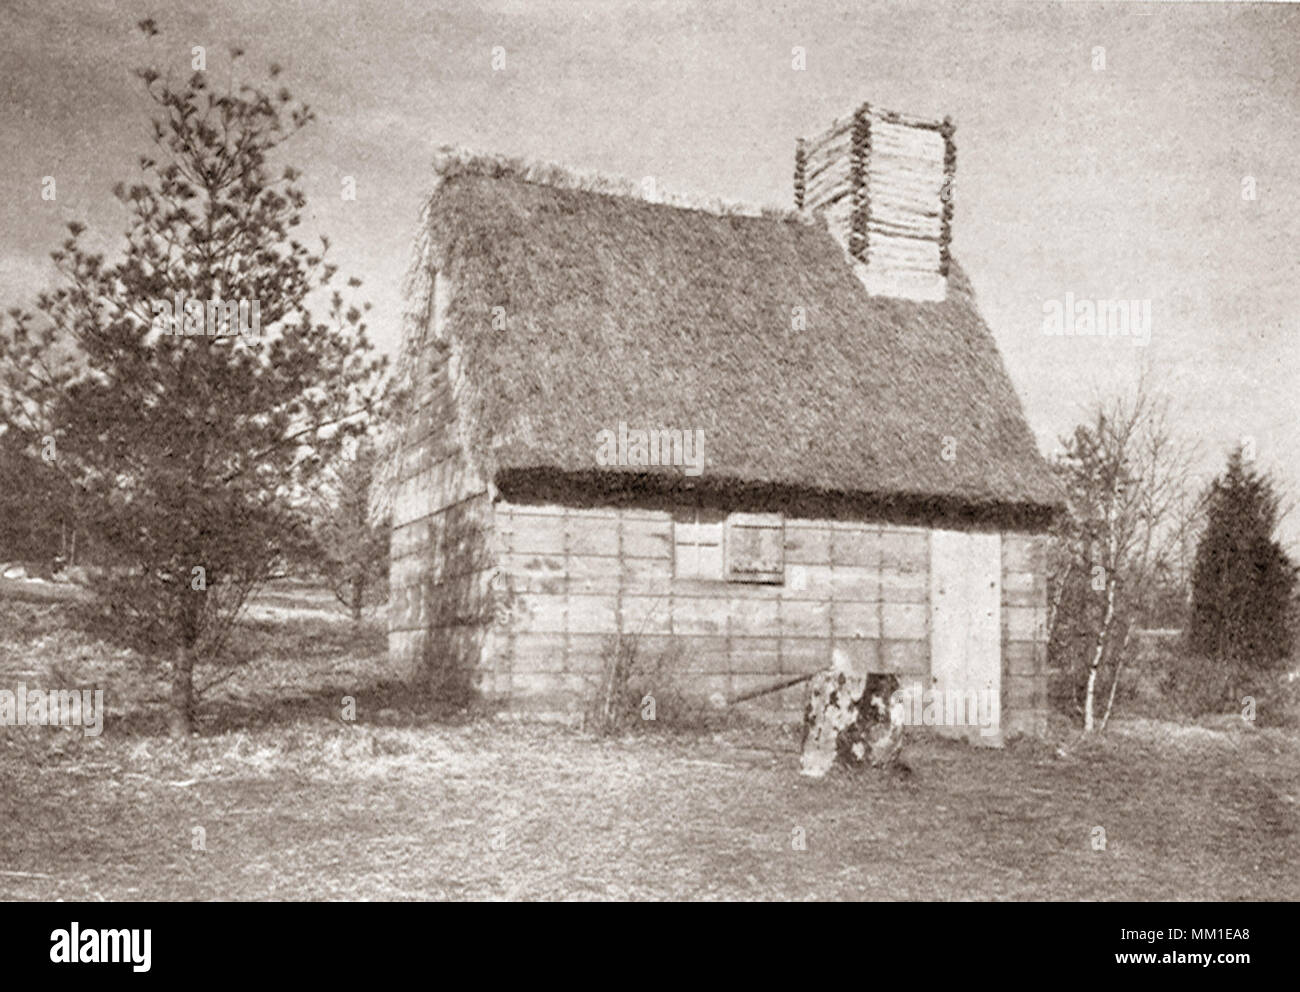 Pioneers Village. Salem. 1935 Stock Photo - Alamy